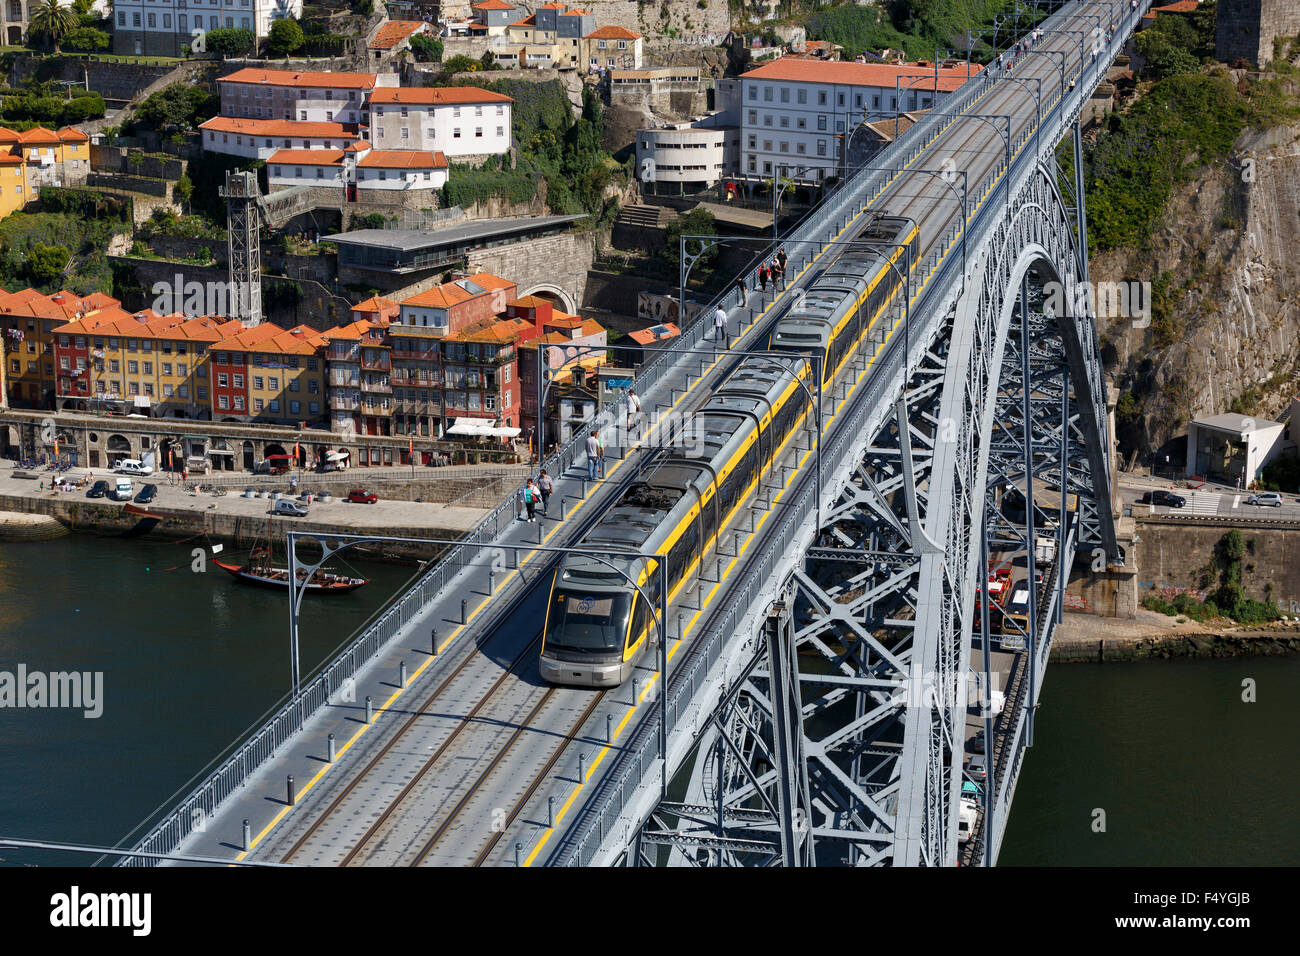 Flexity Outlook Eurotram train of the Porto Metro crossing the double-deck bridge of Ponte Luis 1 over the River Douro Portugal Stock Photo